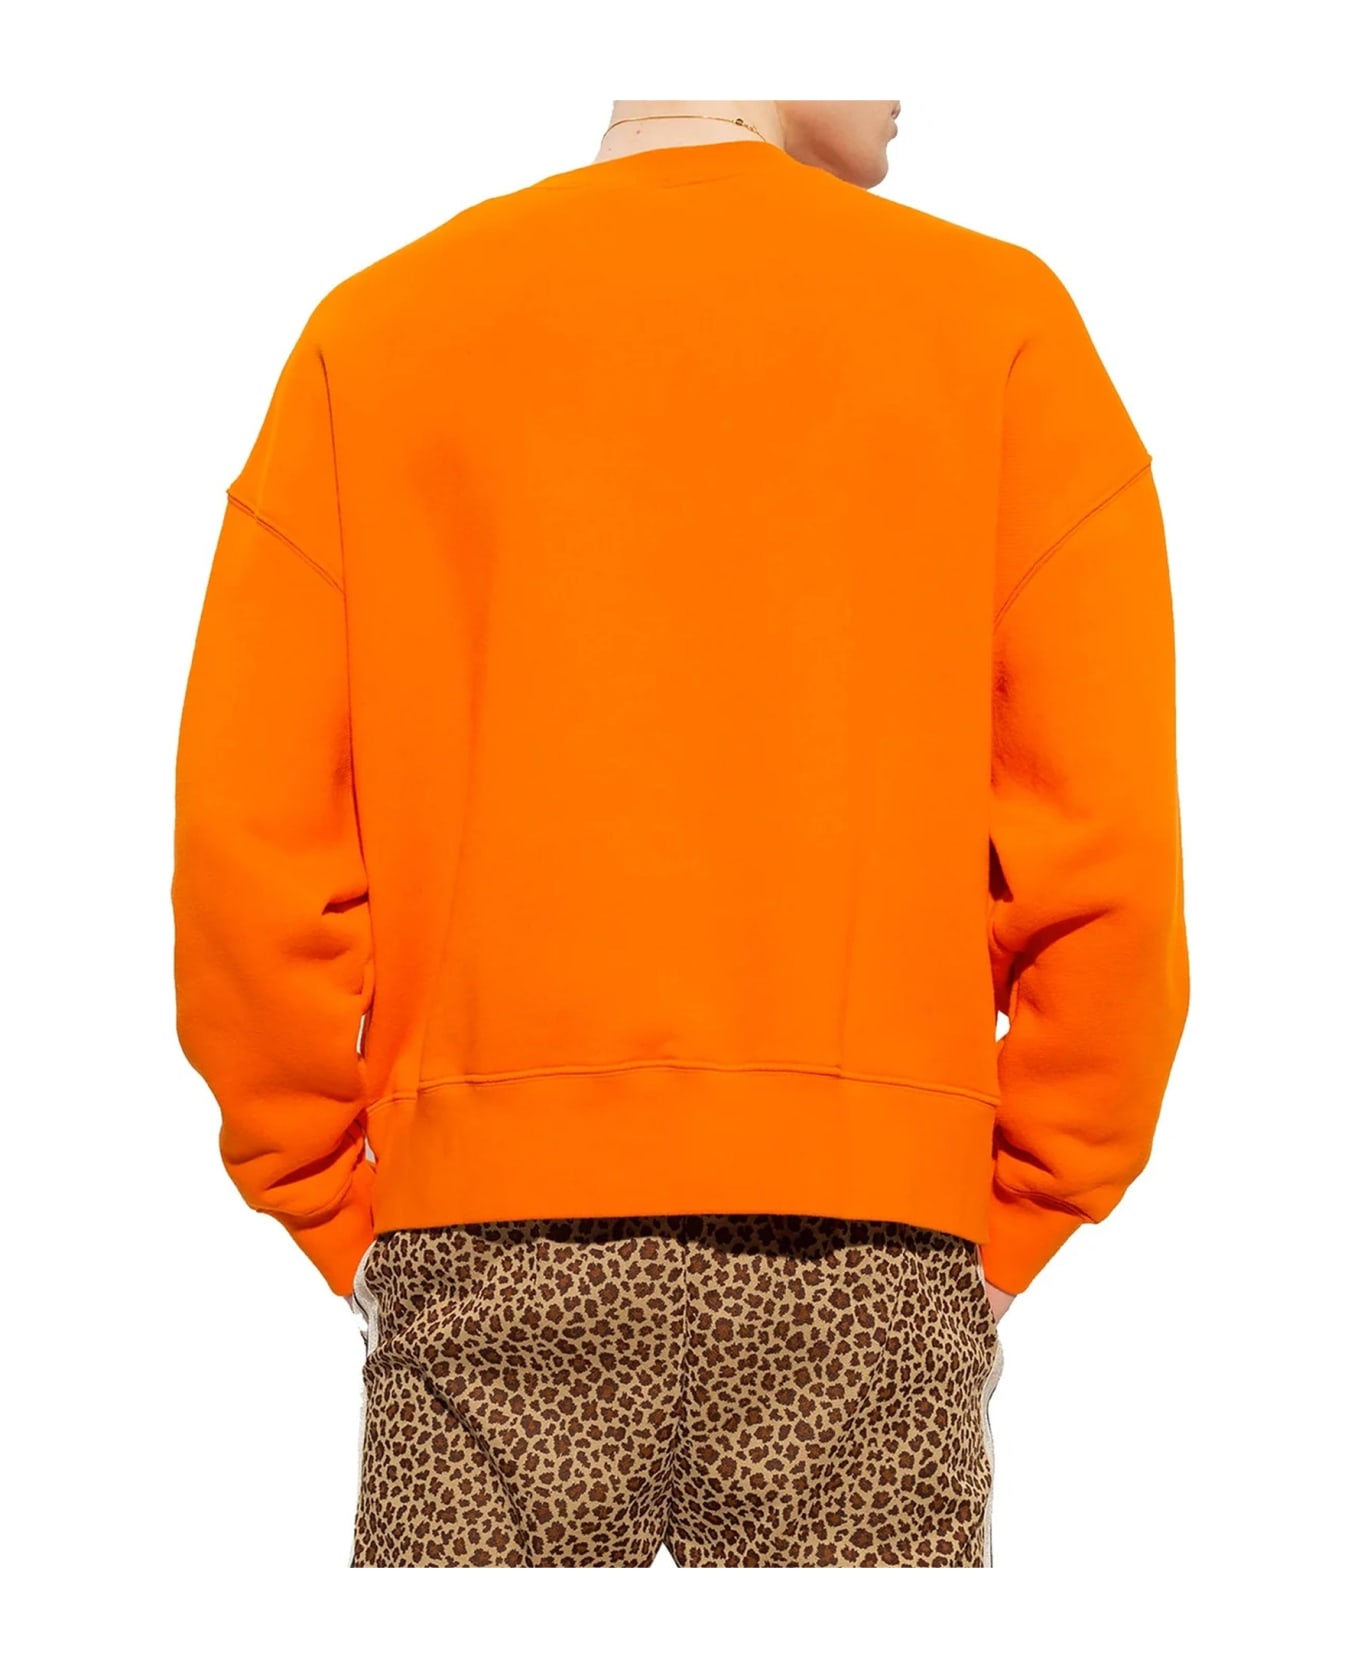 Palm Angels Cotton Logo Sweatshirt - Orange